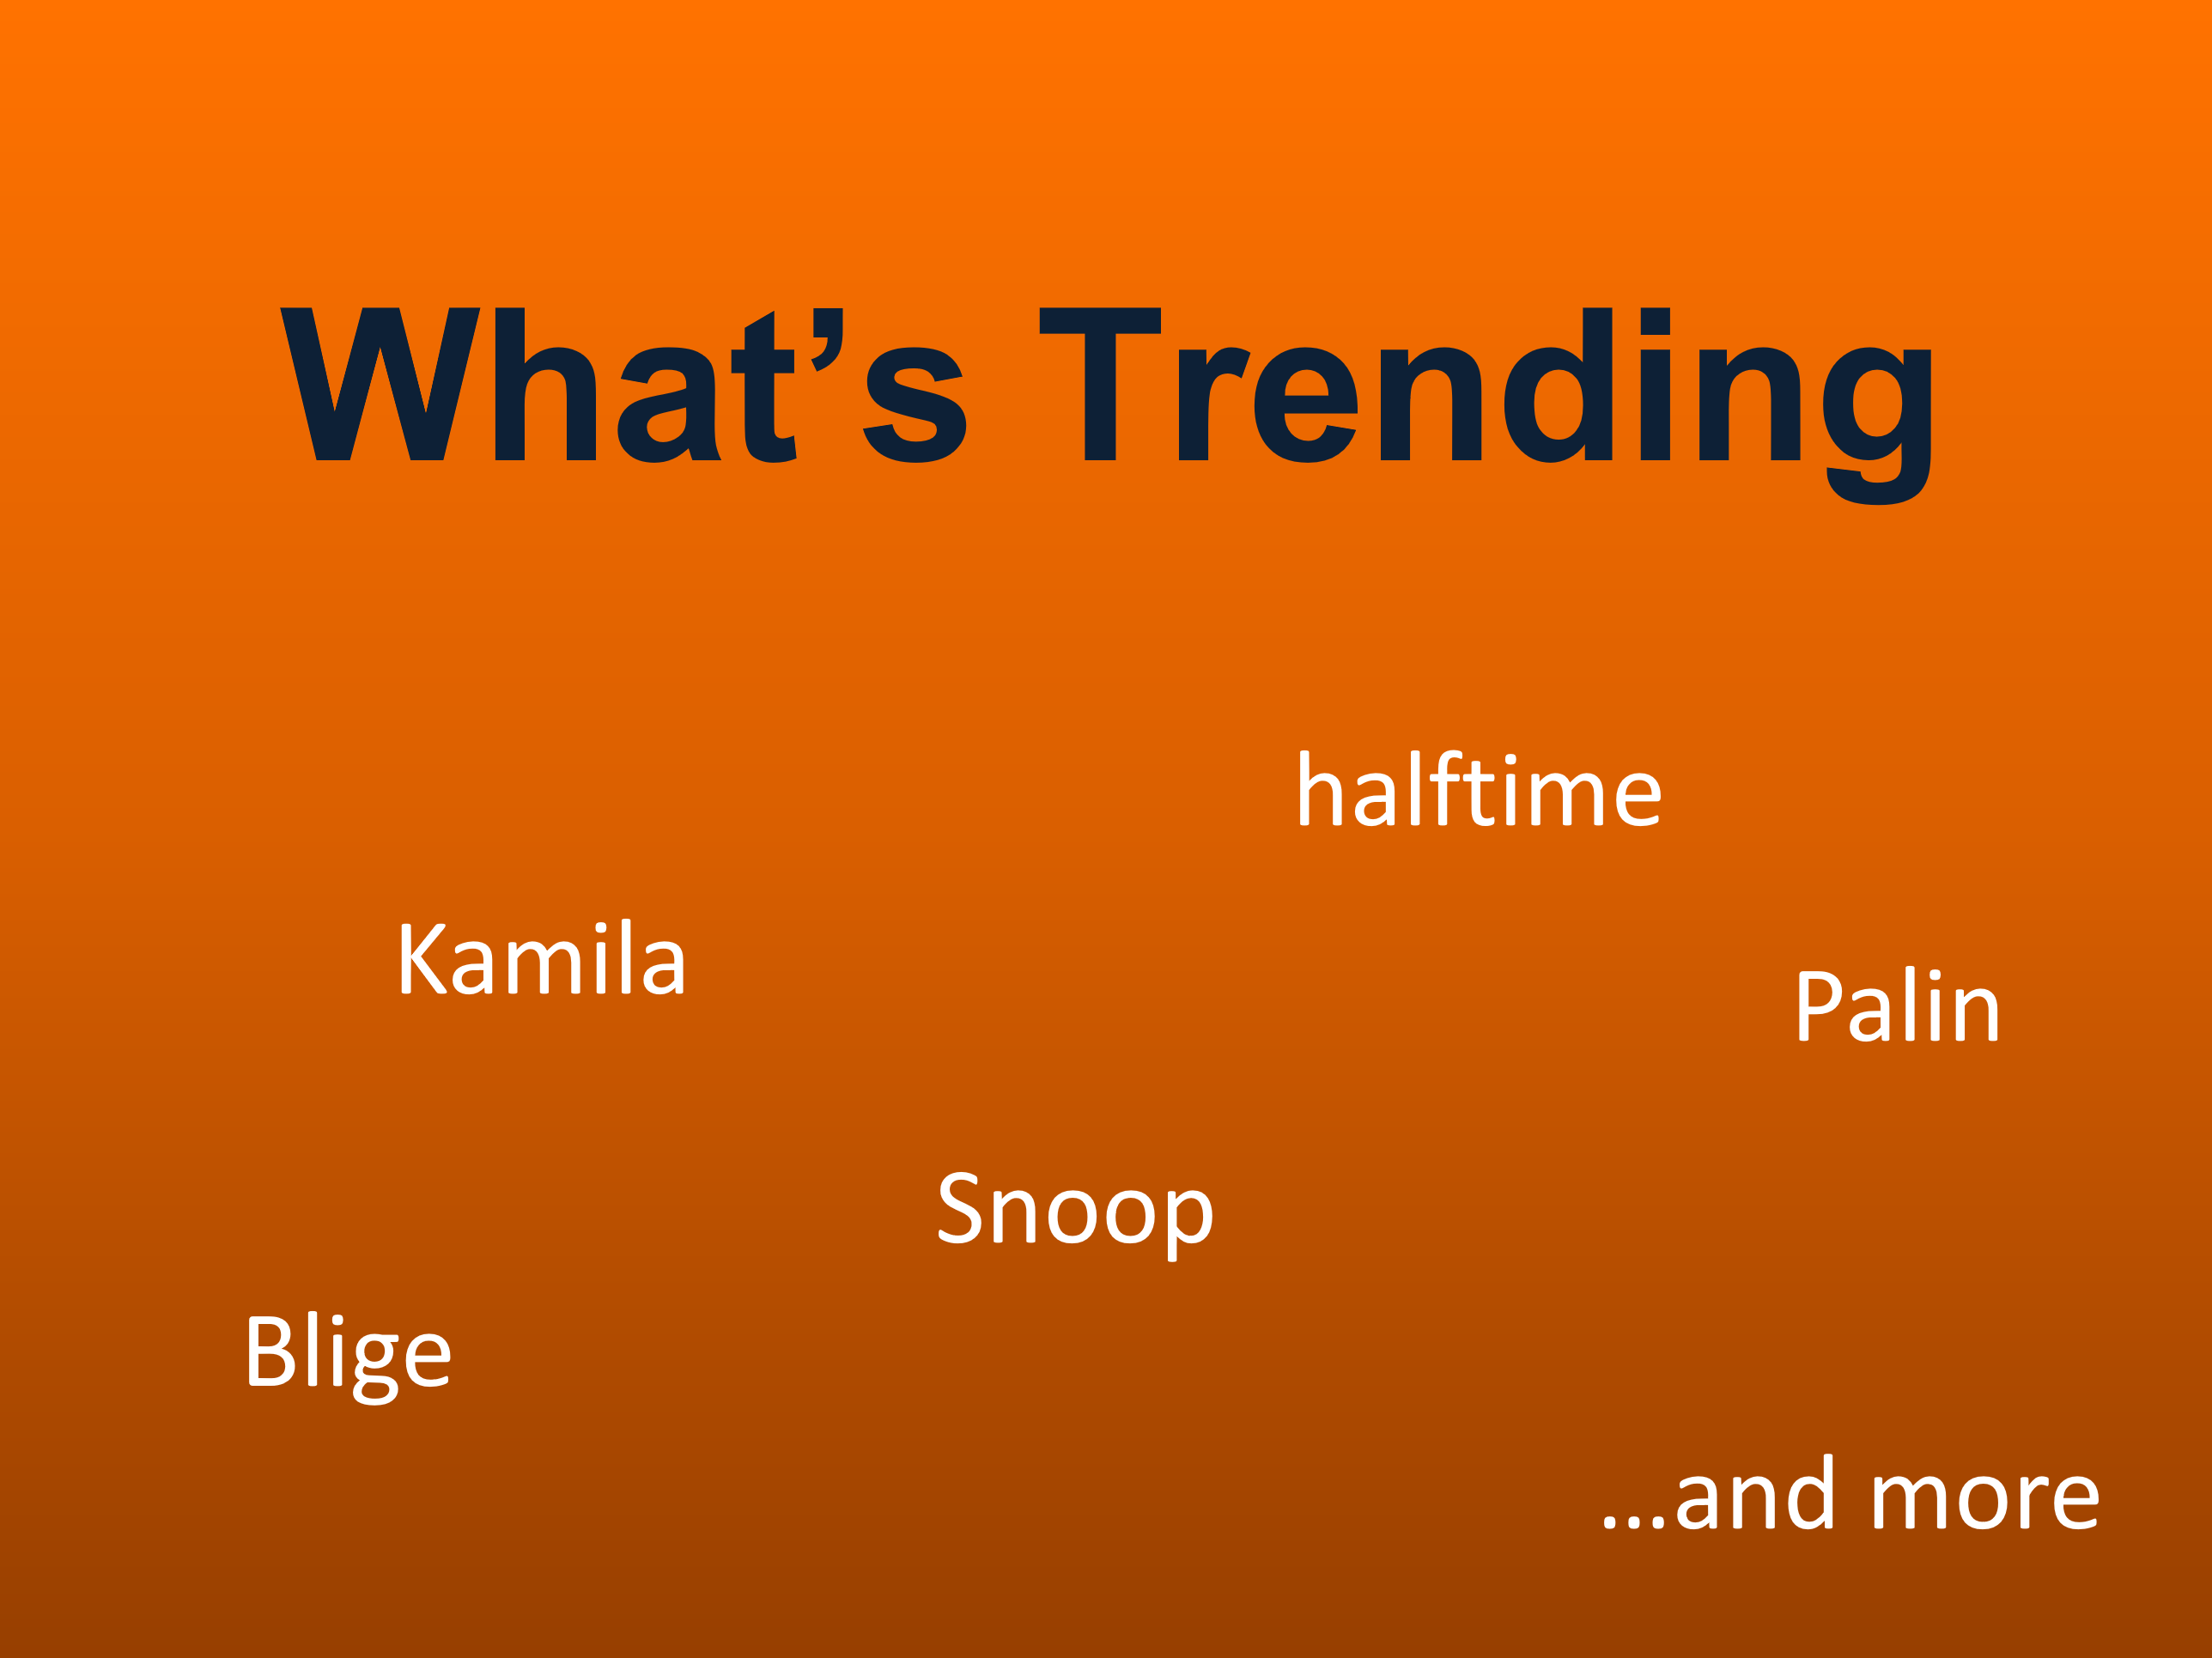 2/18/22 What's Trending This Week?